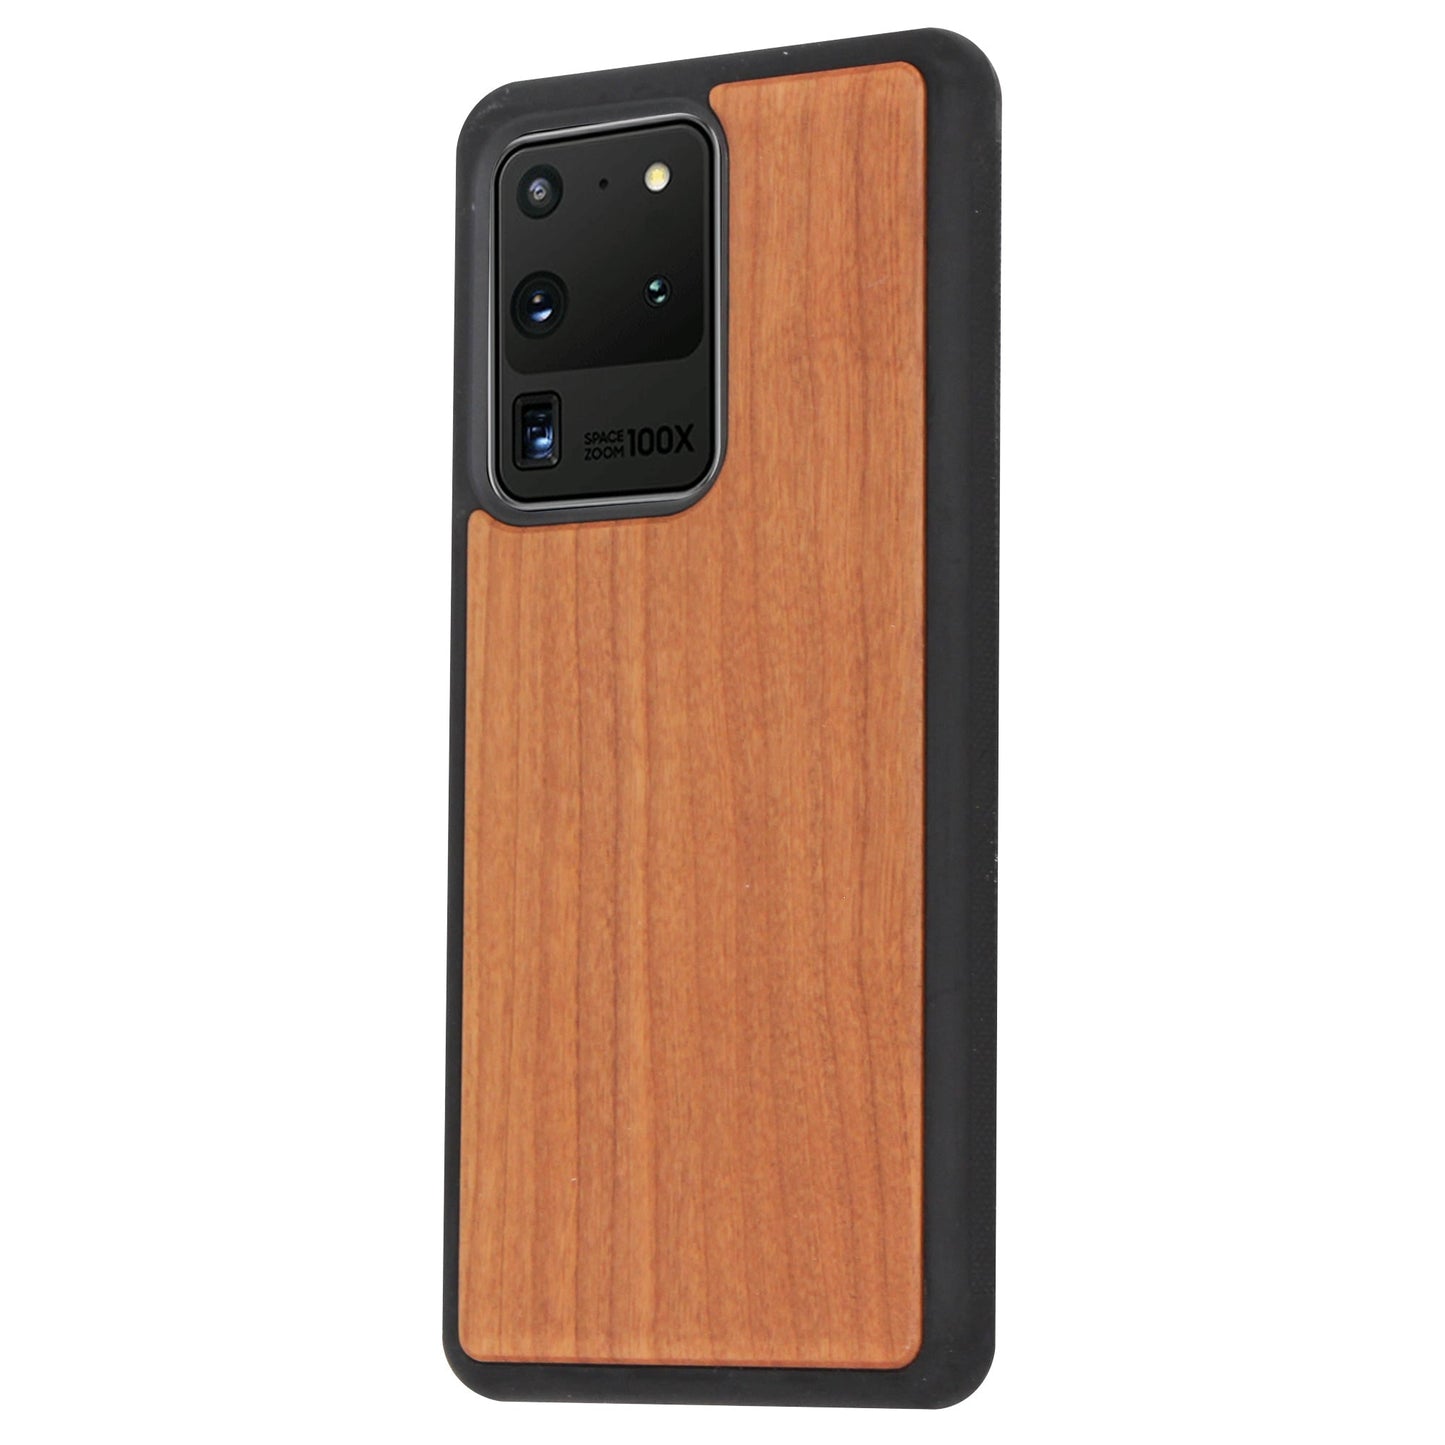 Cherry wood Eden case for Samsung Galaxy S20 Ultra